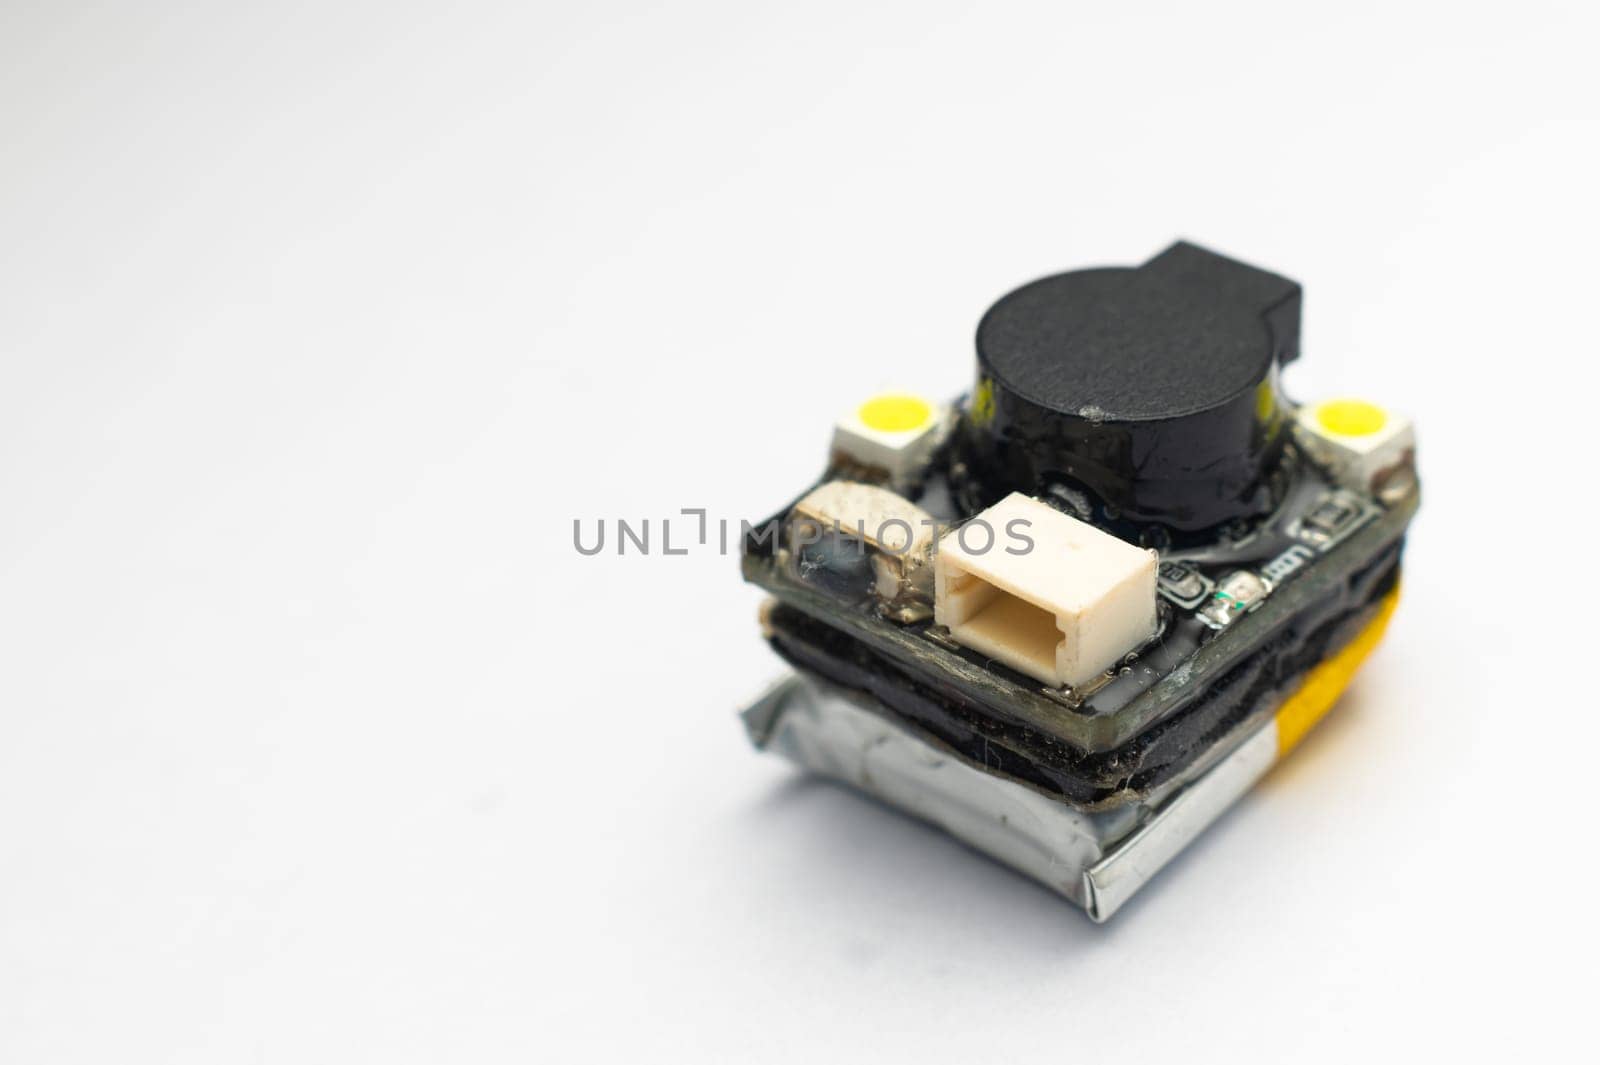 Autonomous search beacon with autonomous battery and search speaker for drones by yanik88